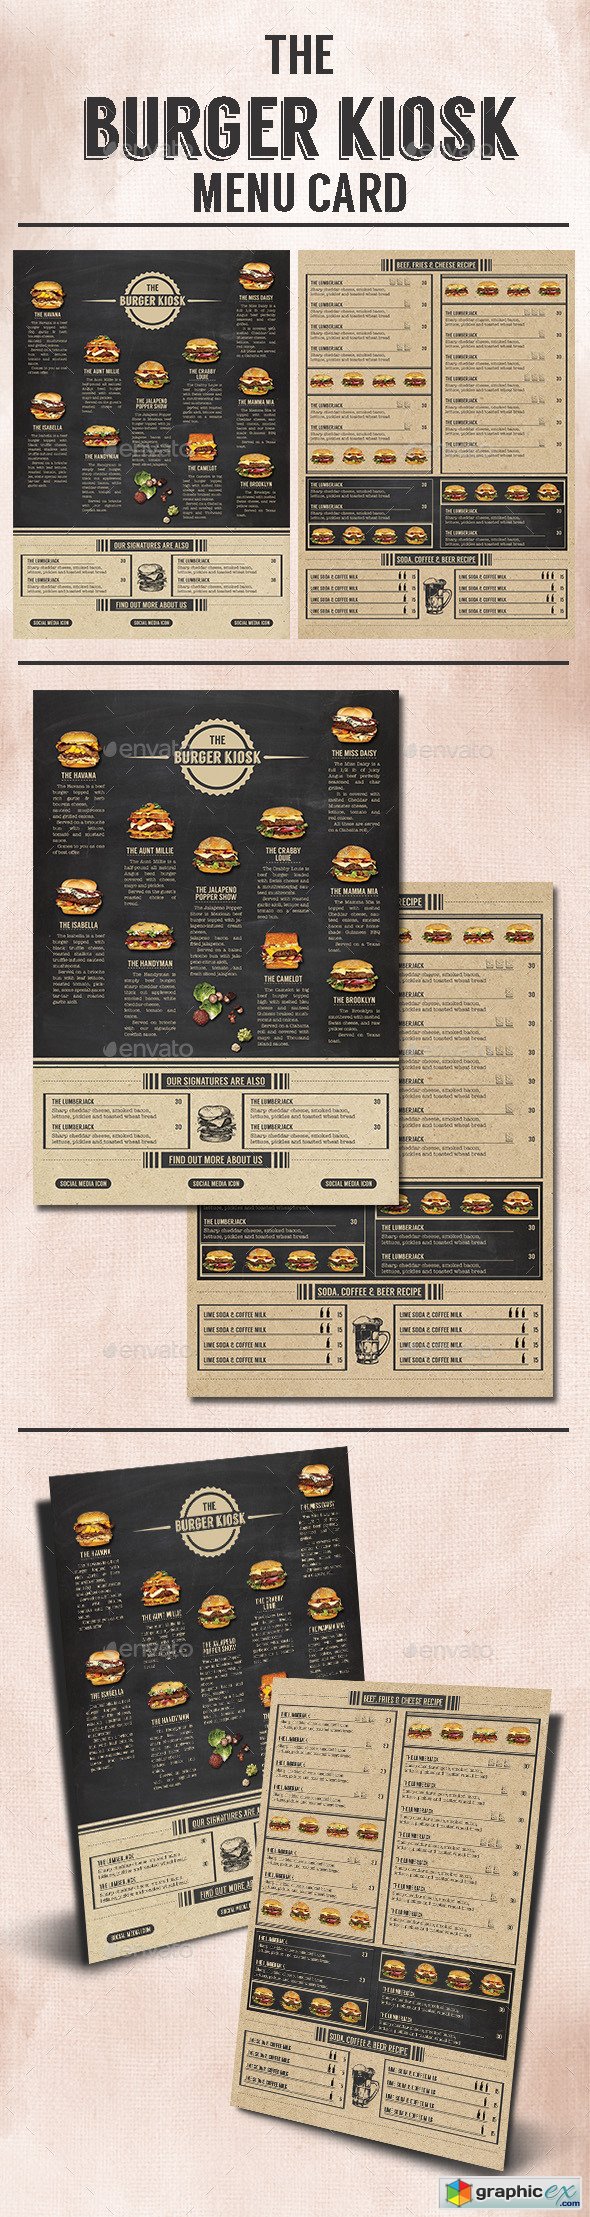 The Burger Kiosk Menu